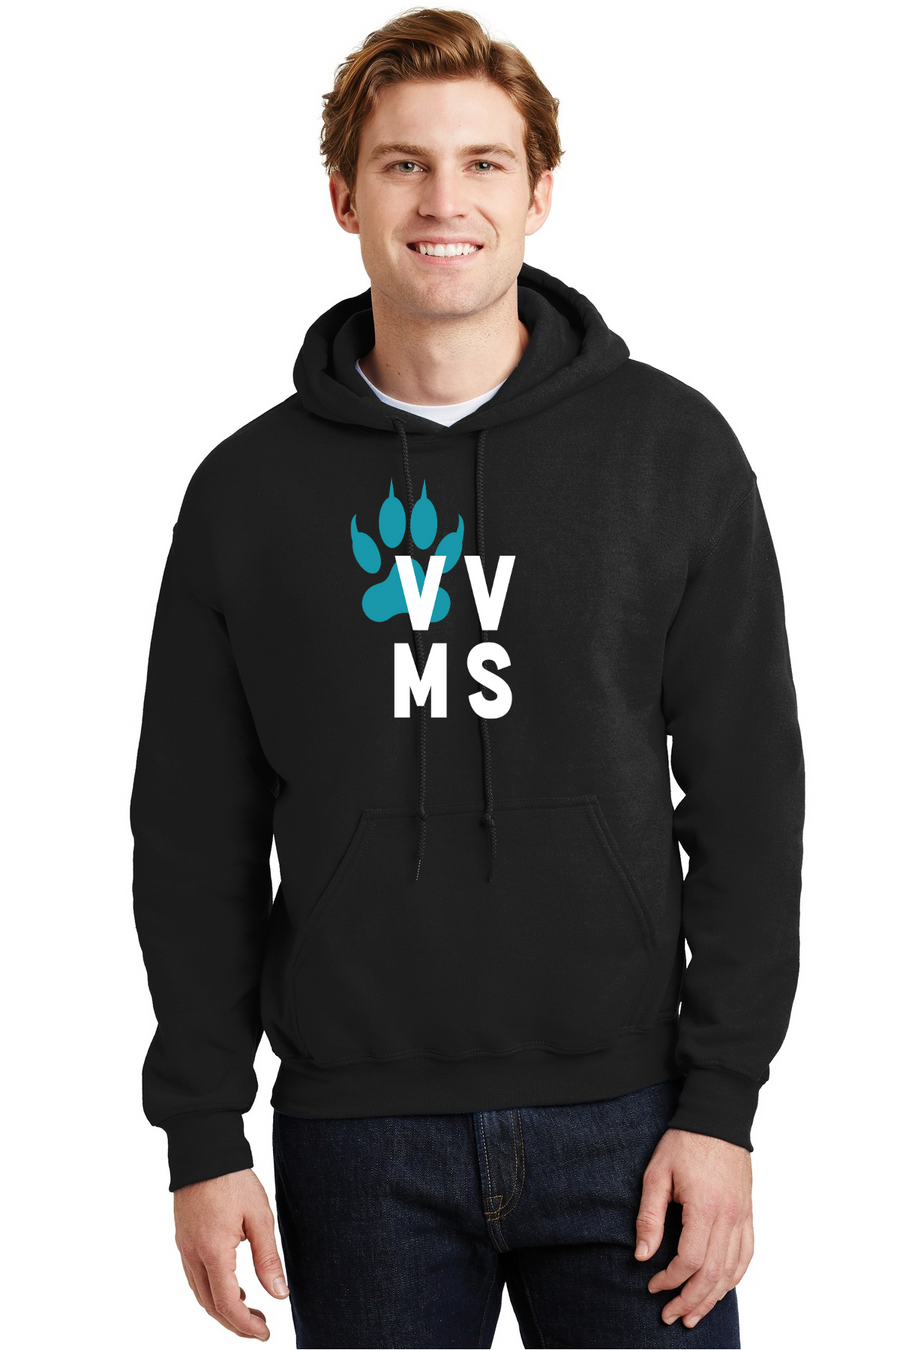 Valley View Middle School On-Demand Spirit Wear-Unisex Hoodie VVMS Logo